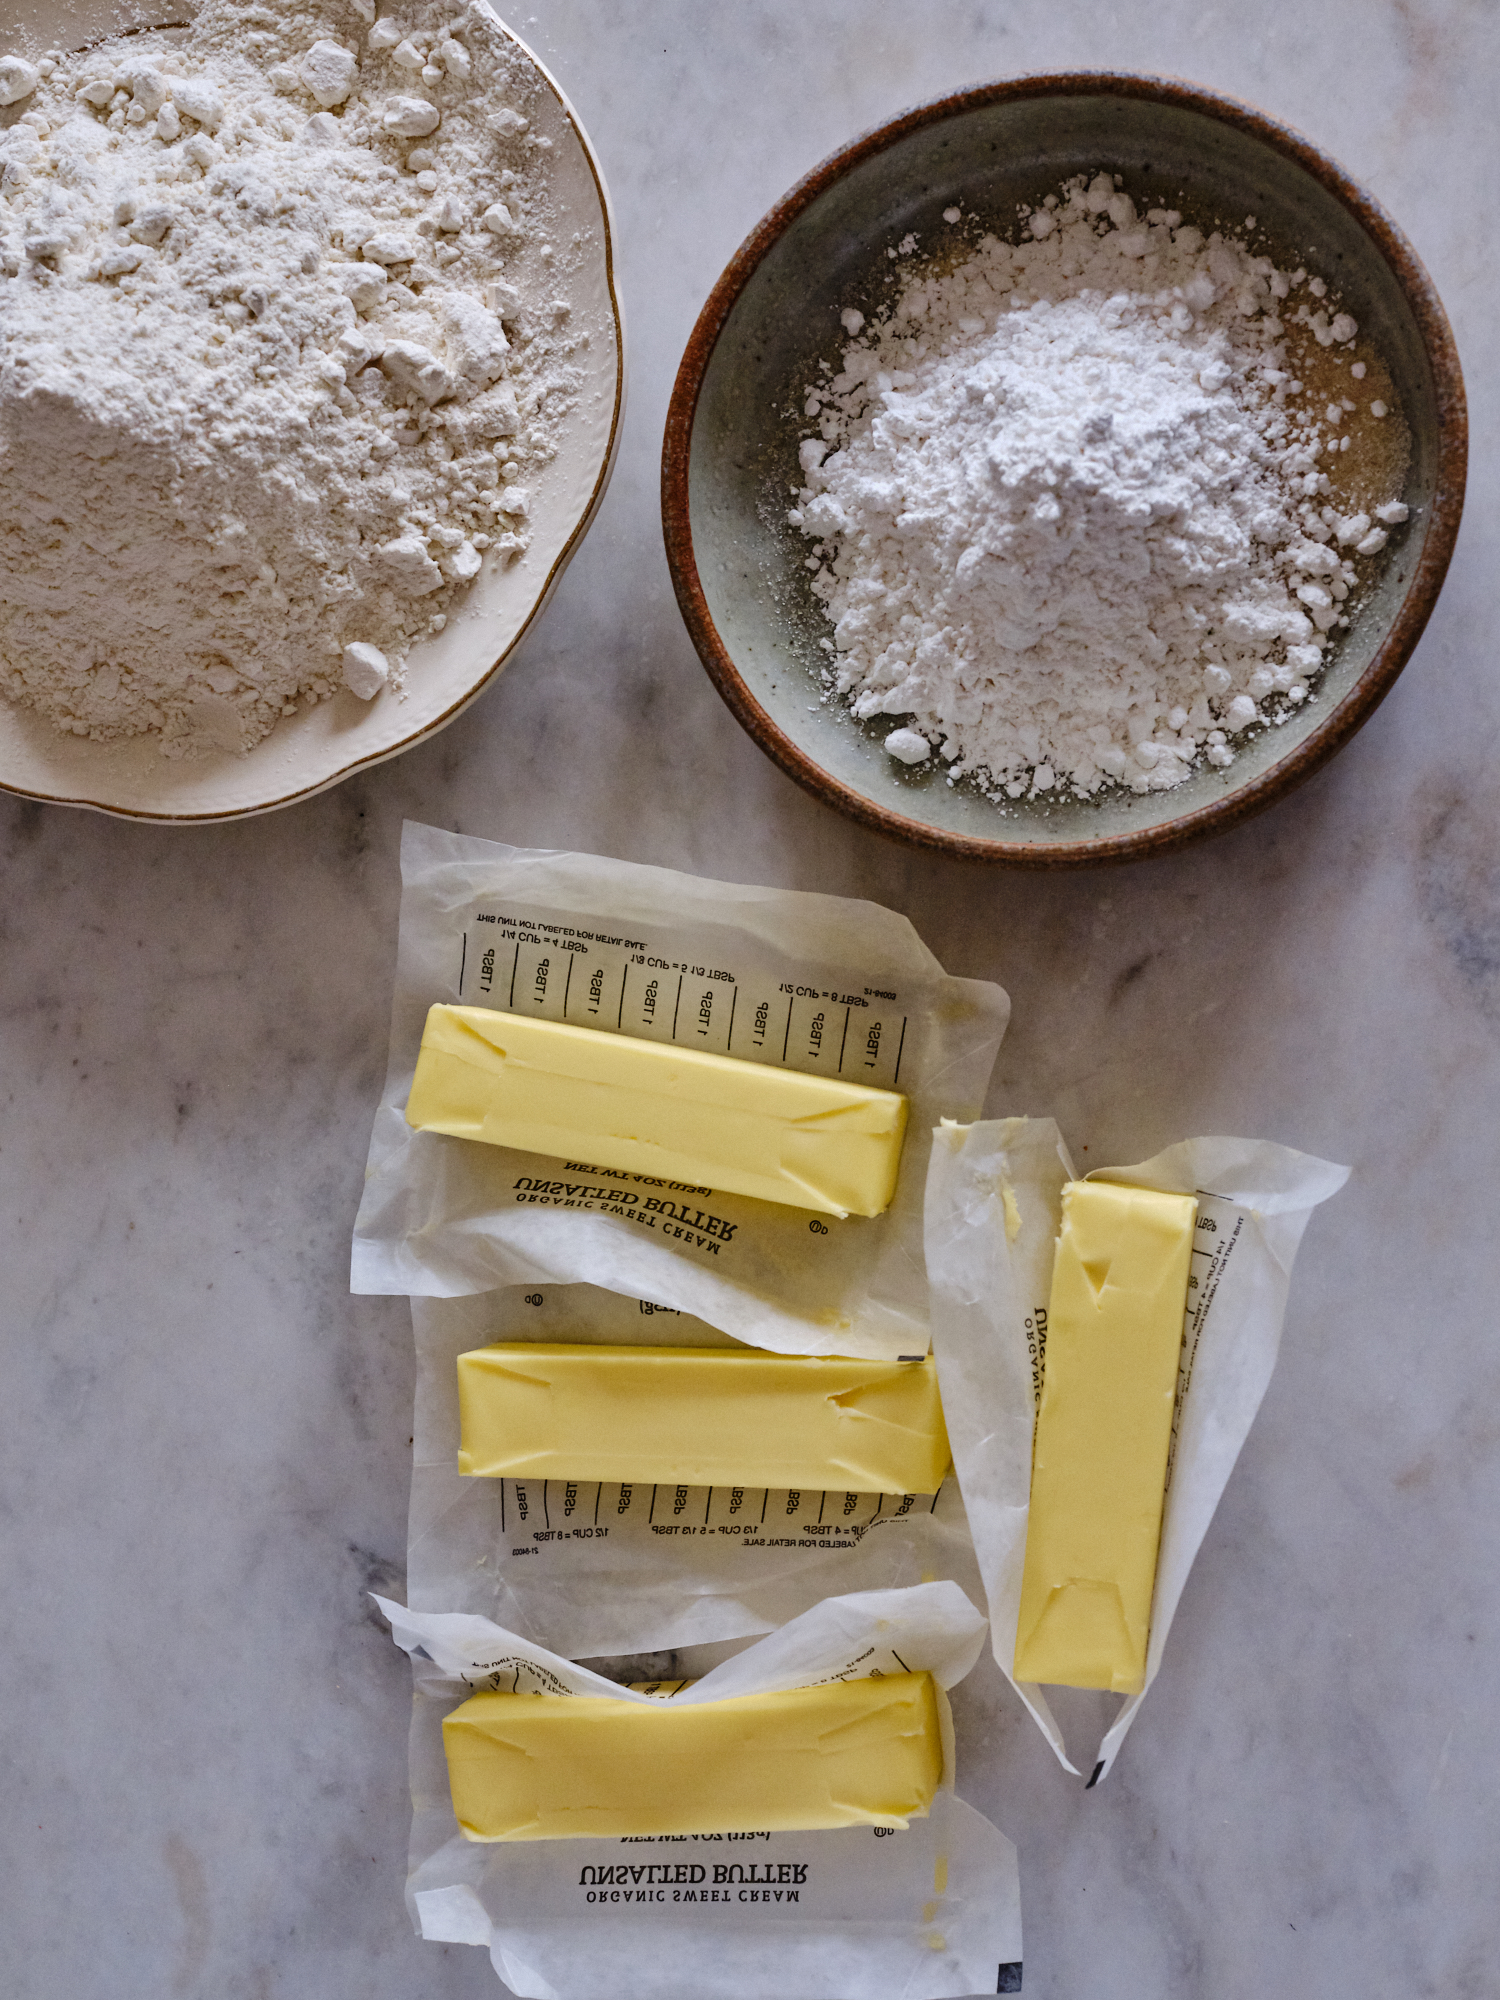 Ingredients for Making Shortbread - Flour, Butter, Sugar, Salt